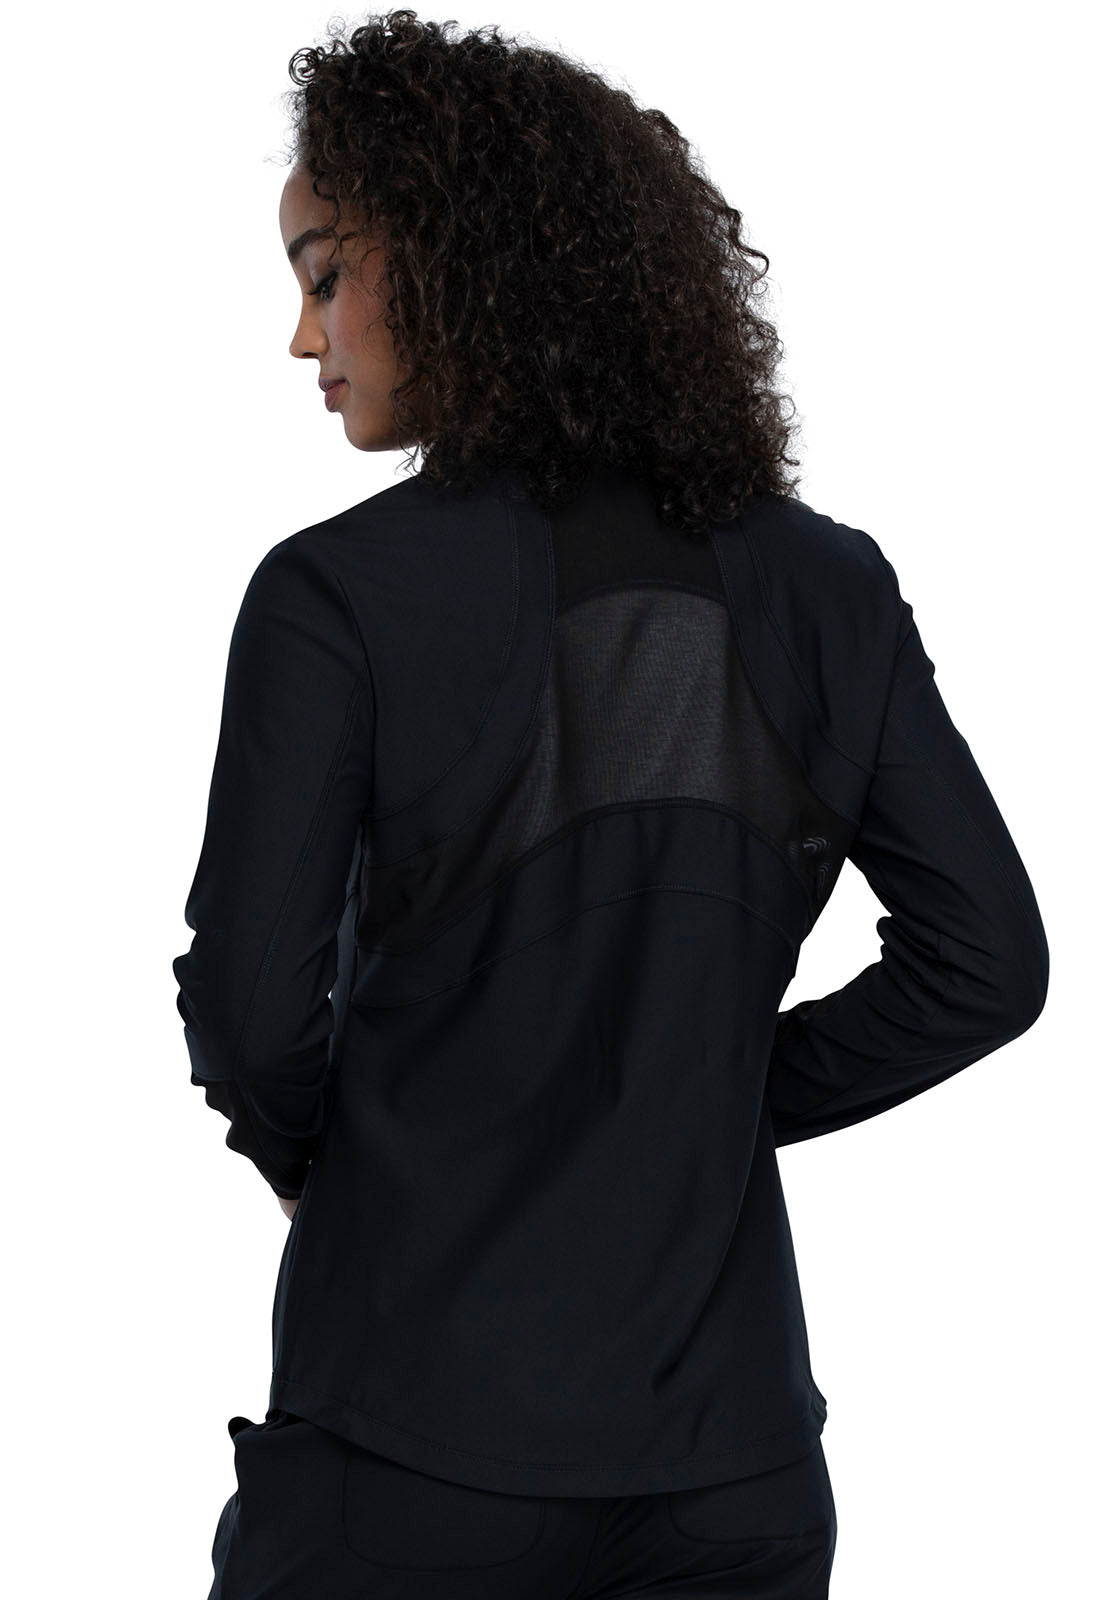 Cherokee Form CK390 Women's Jacket Black Back